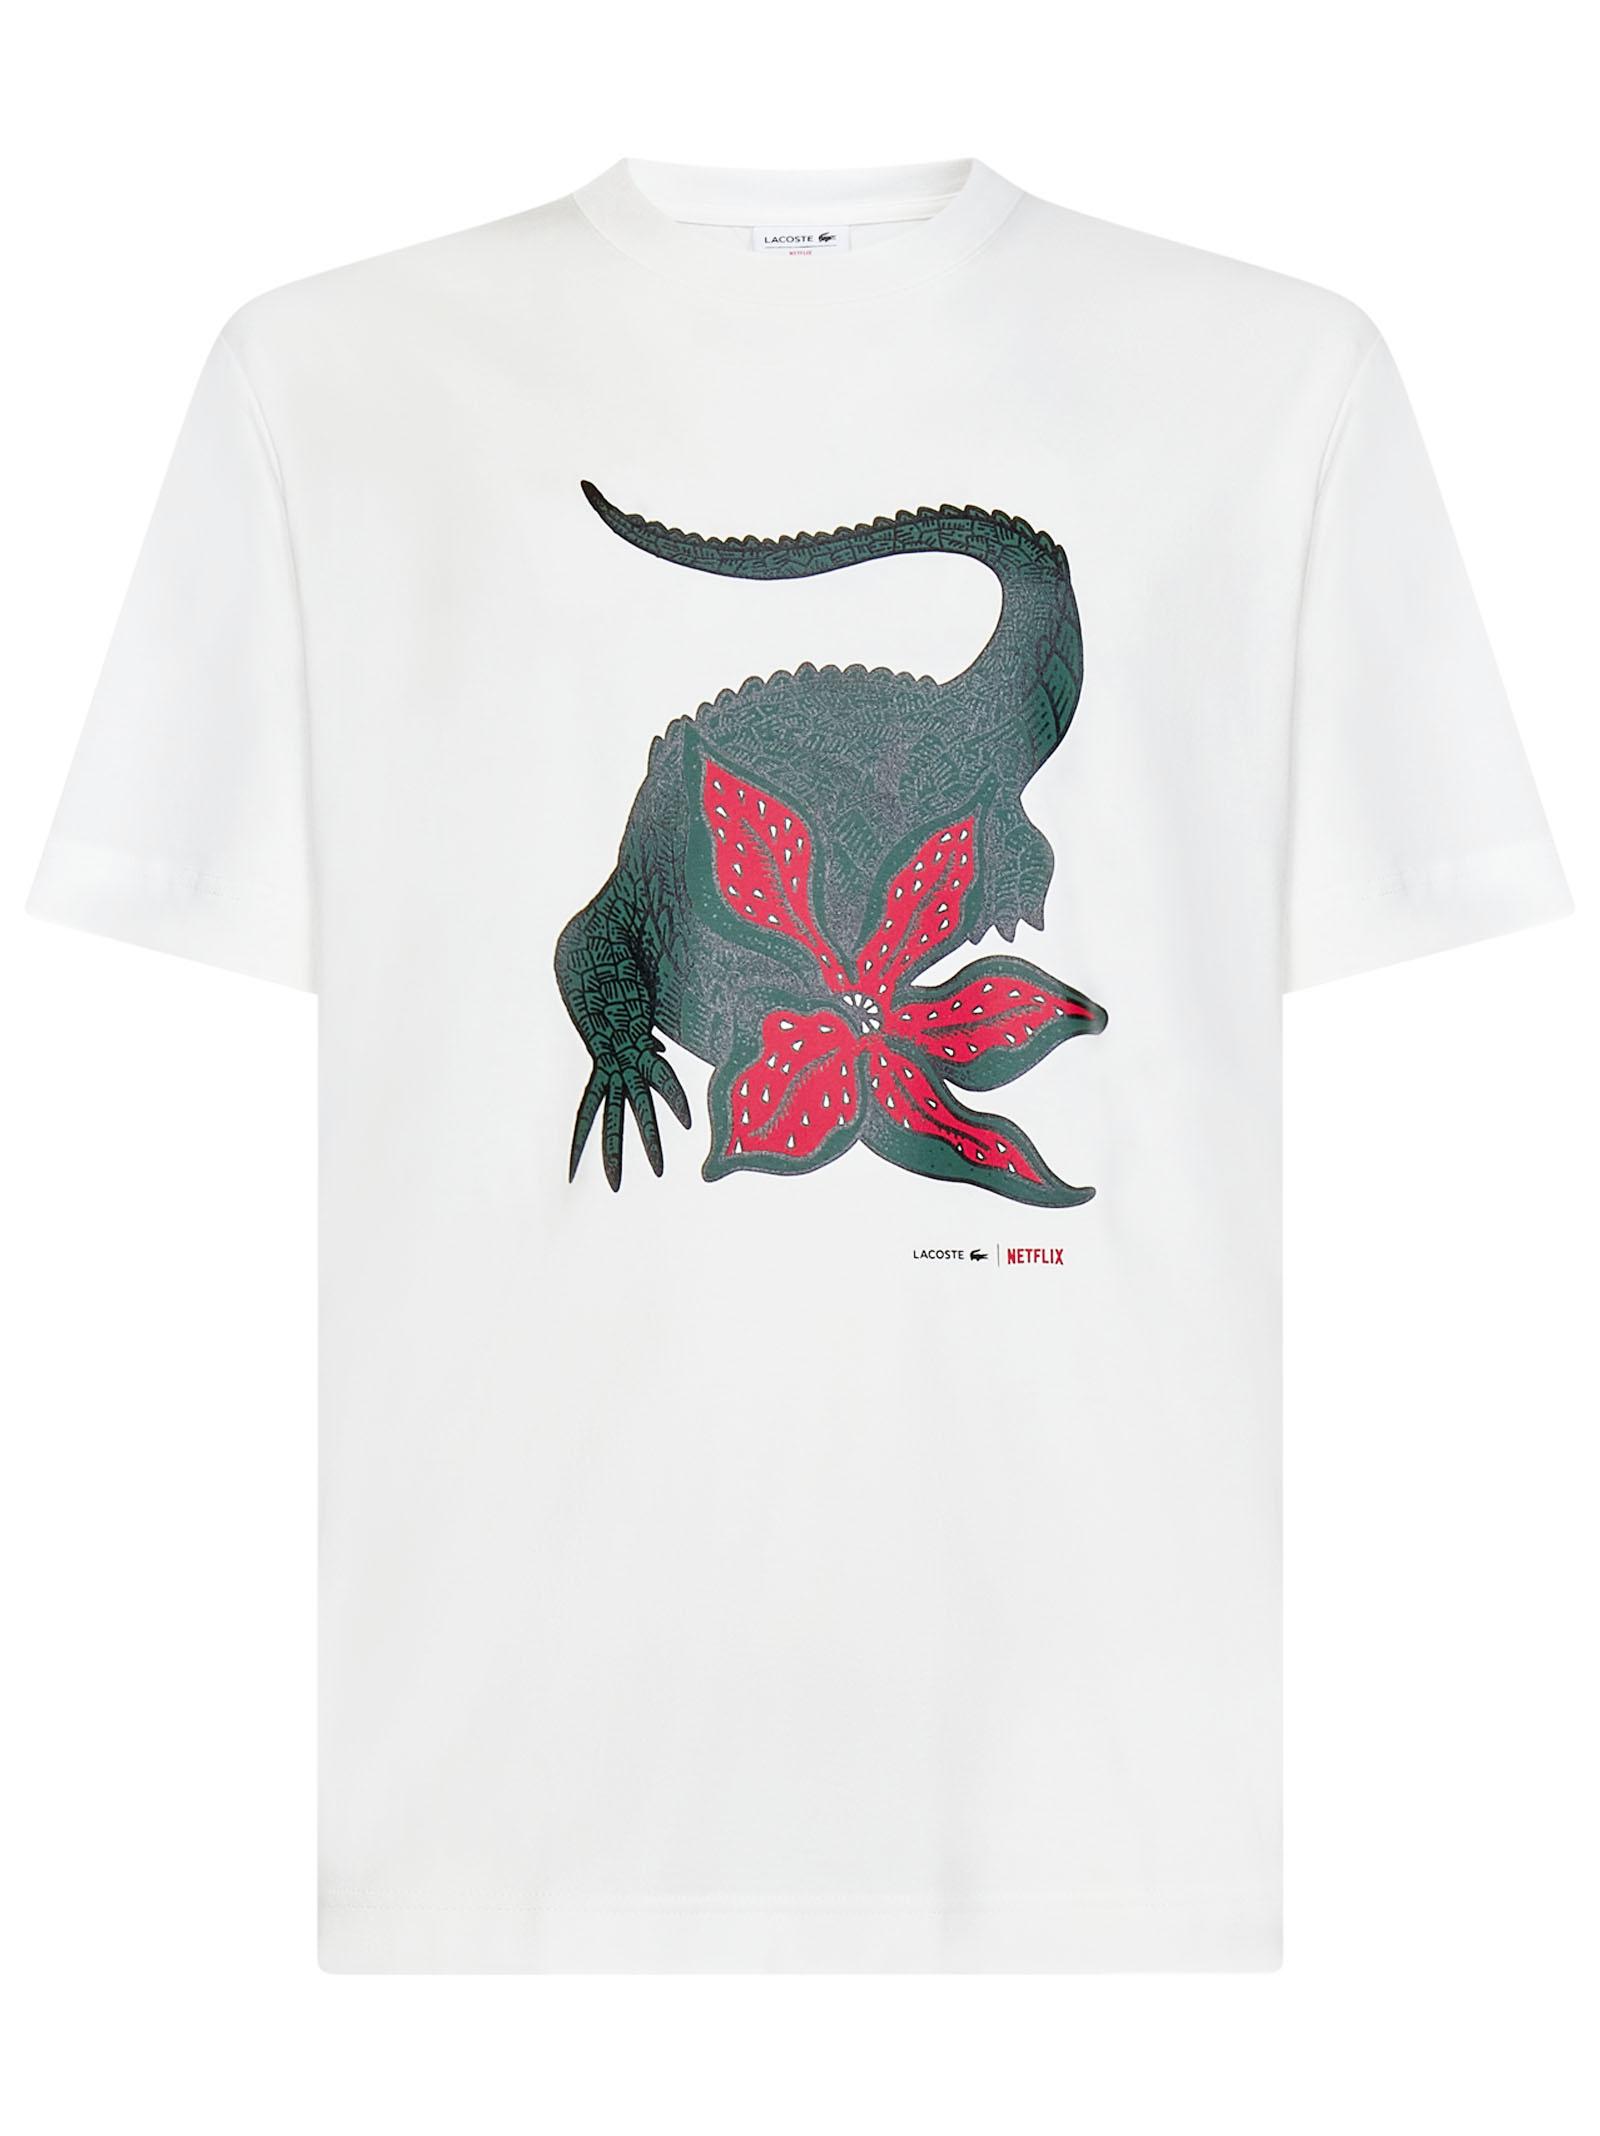 Lacoste X Netflix T-shirt in White for Men | Lyst